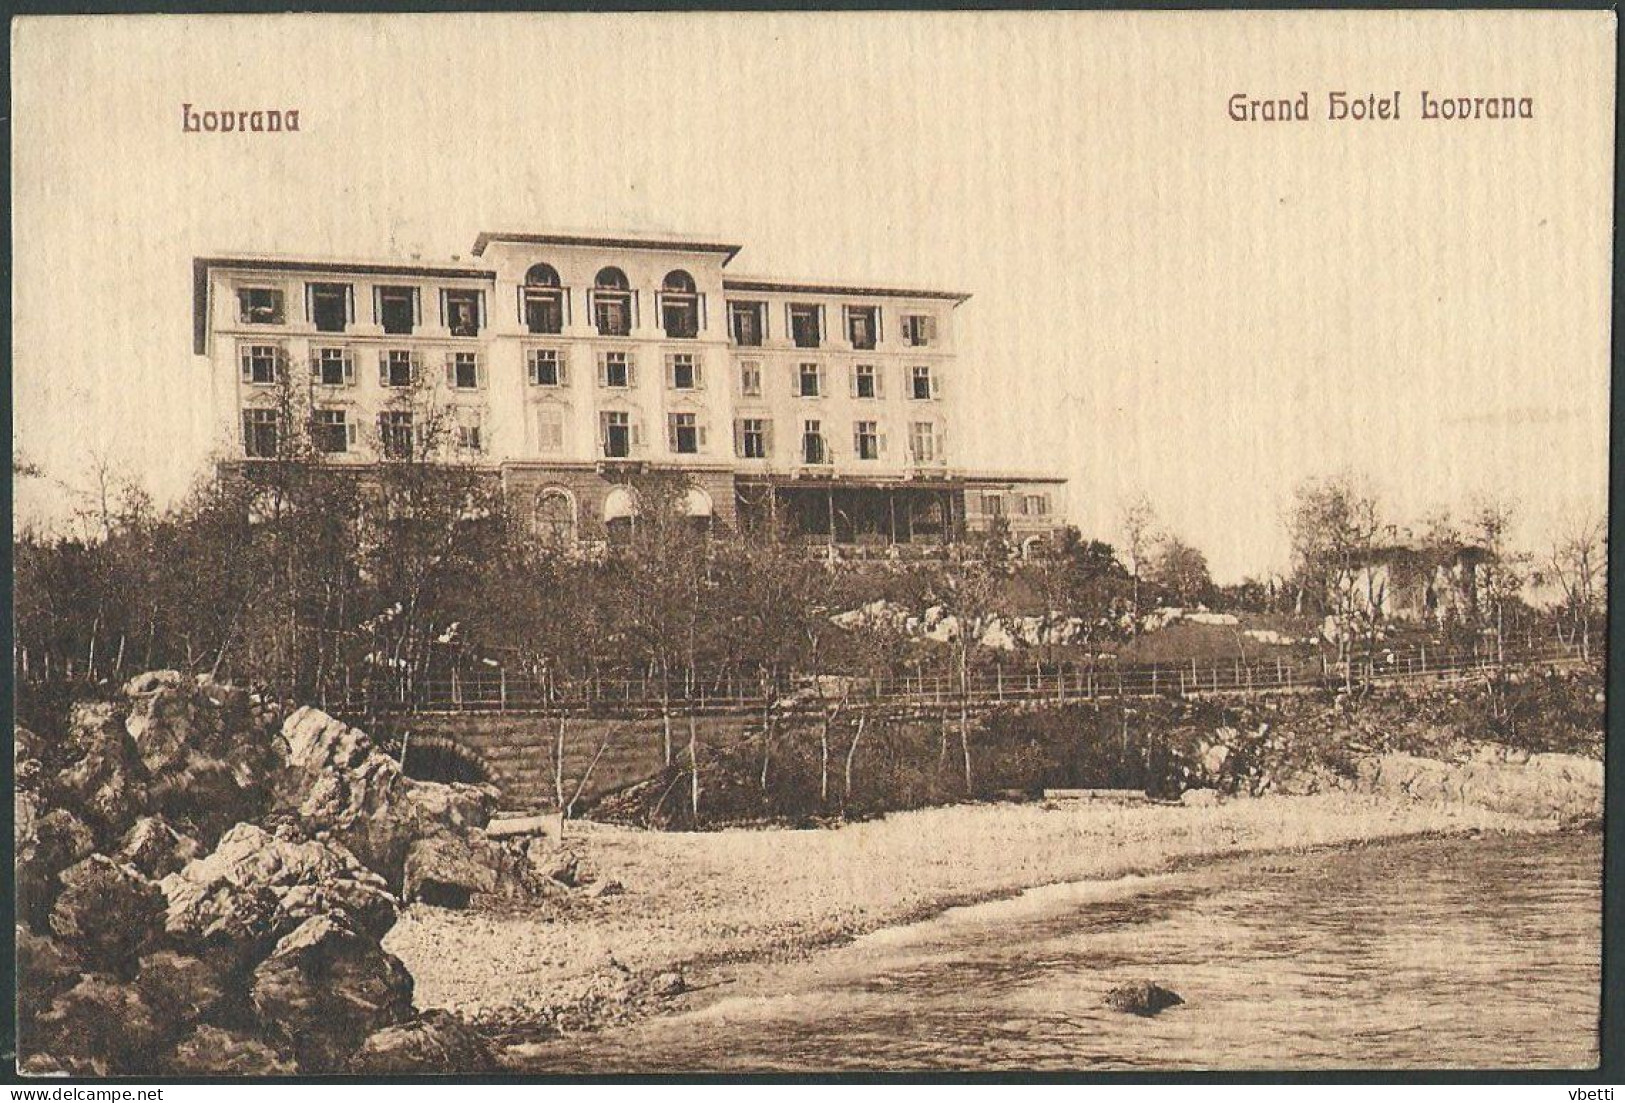 Croatia / Hrvatska: Lovrana (Lovran / Laurana), Grand Hotel Lovrana  1912 - Kroatien